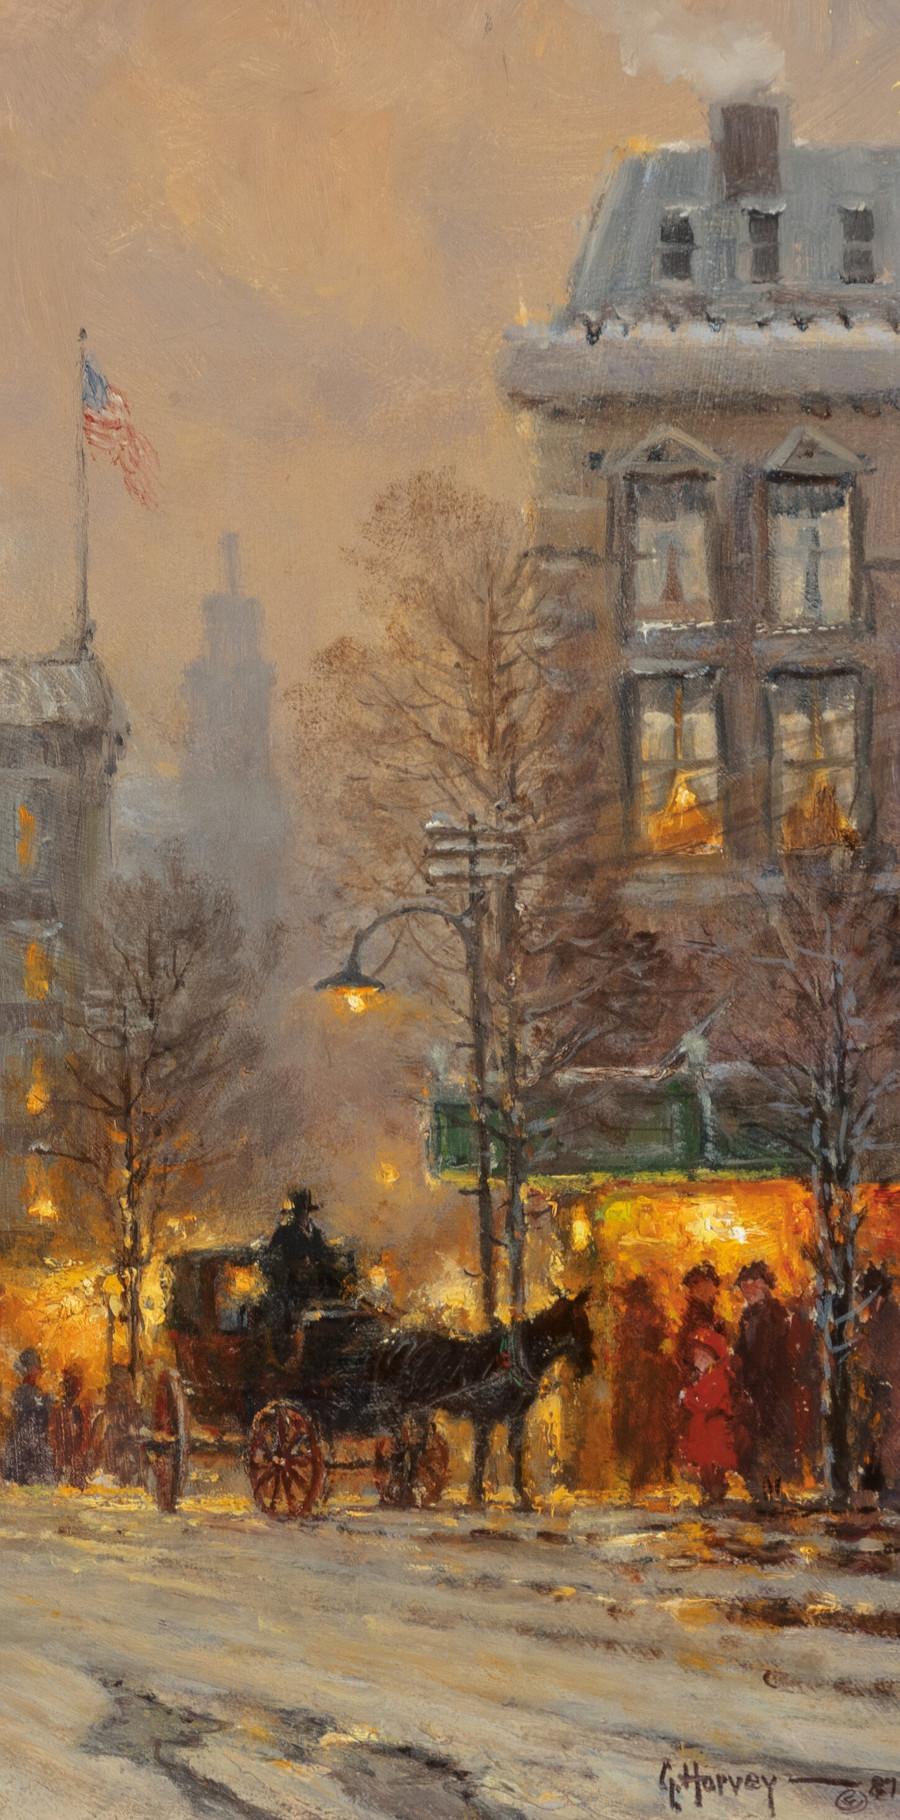 « THE DINNER CARRIAGE » G. HARVEY STREET SCENE Stunning SMALL PAINTING - Impressionnisme Painting par G. Harvey